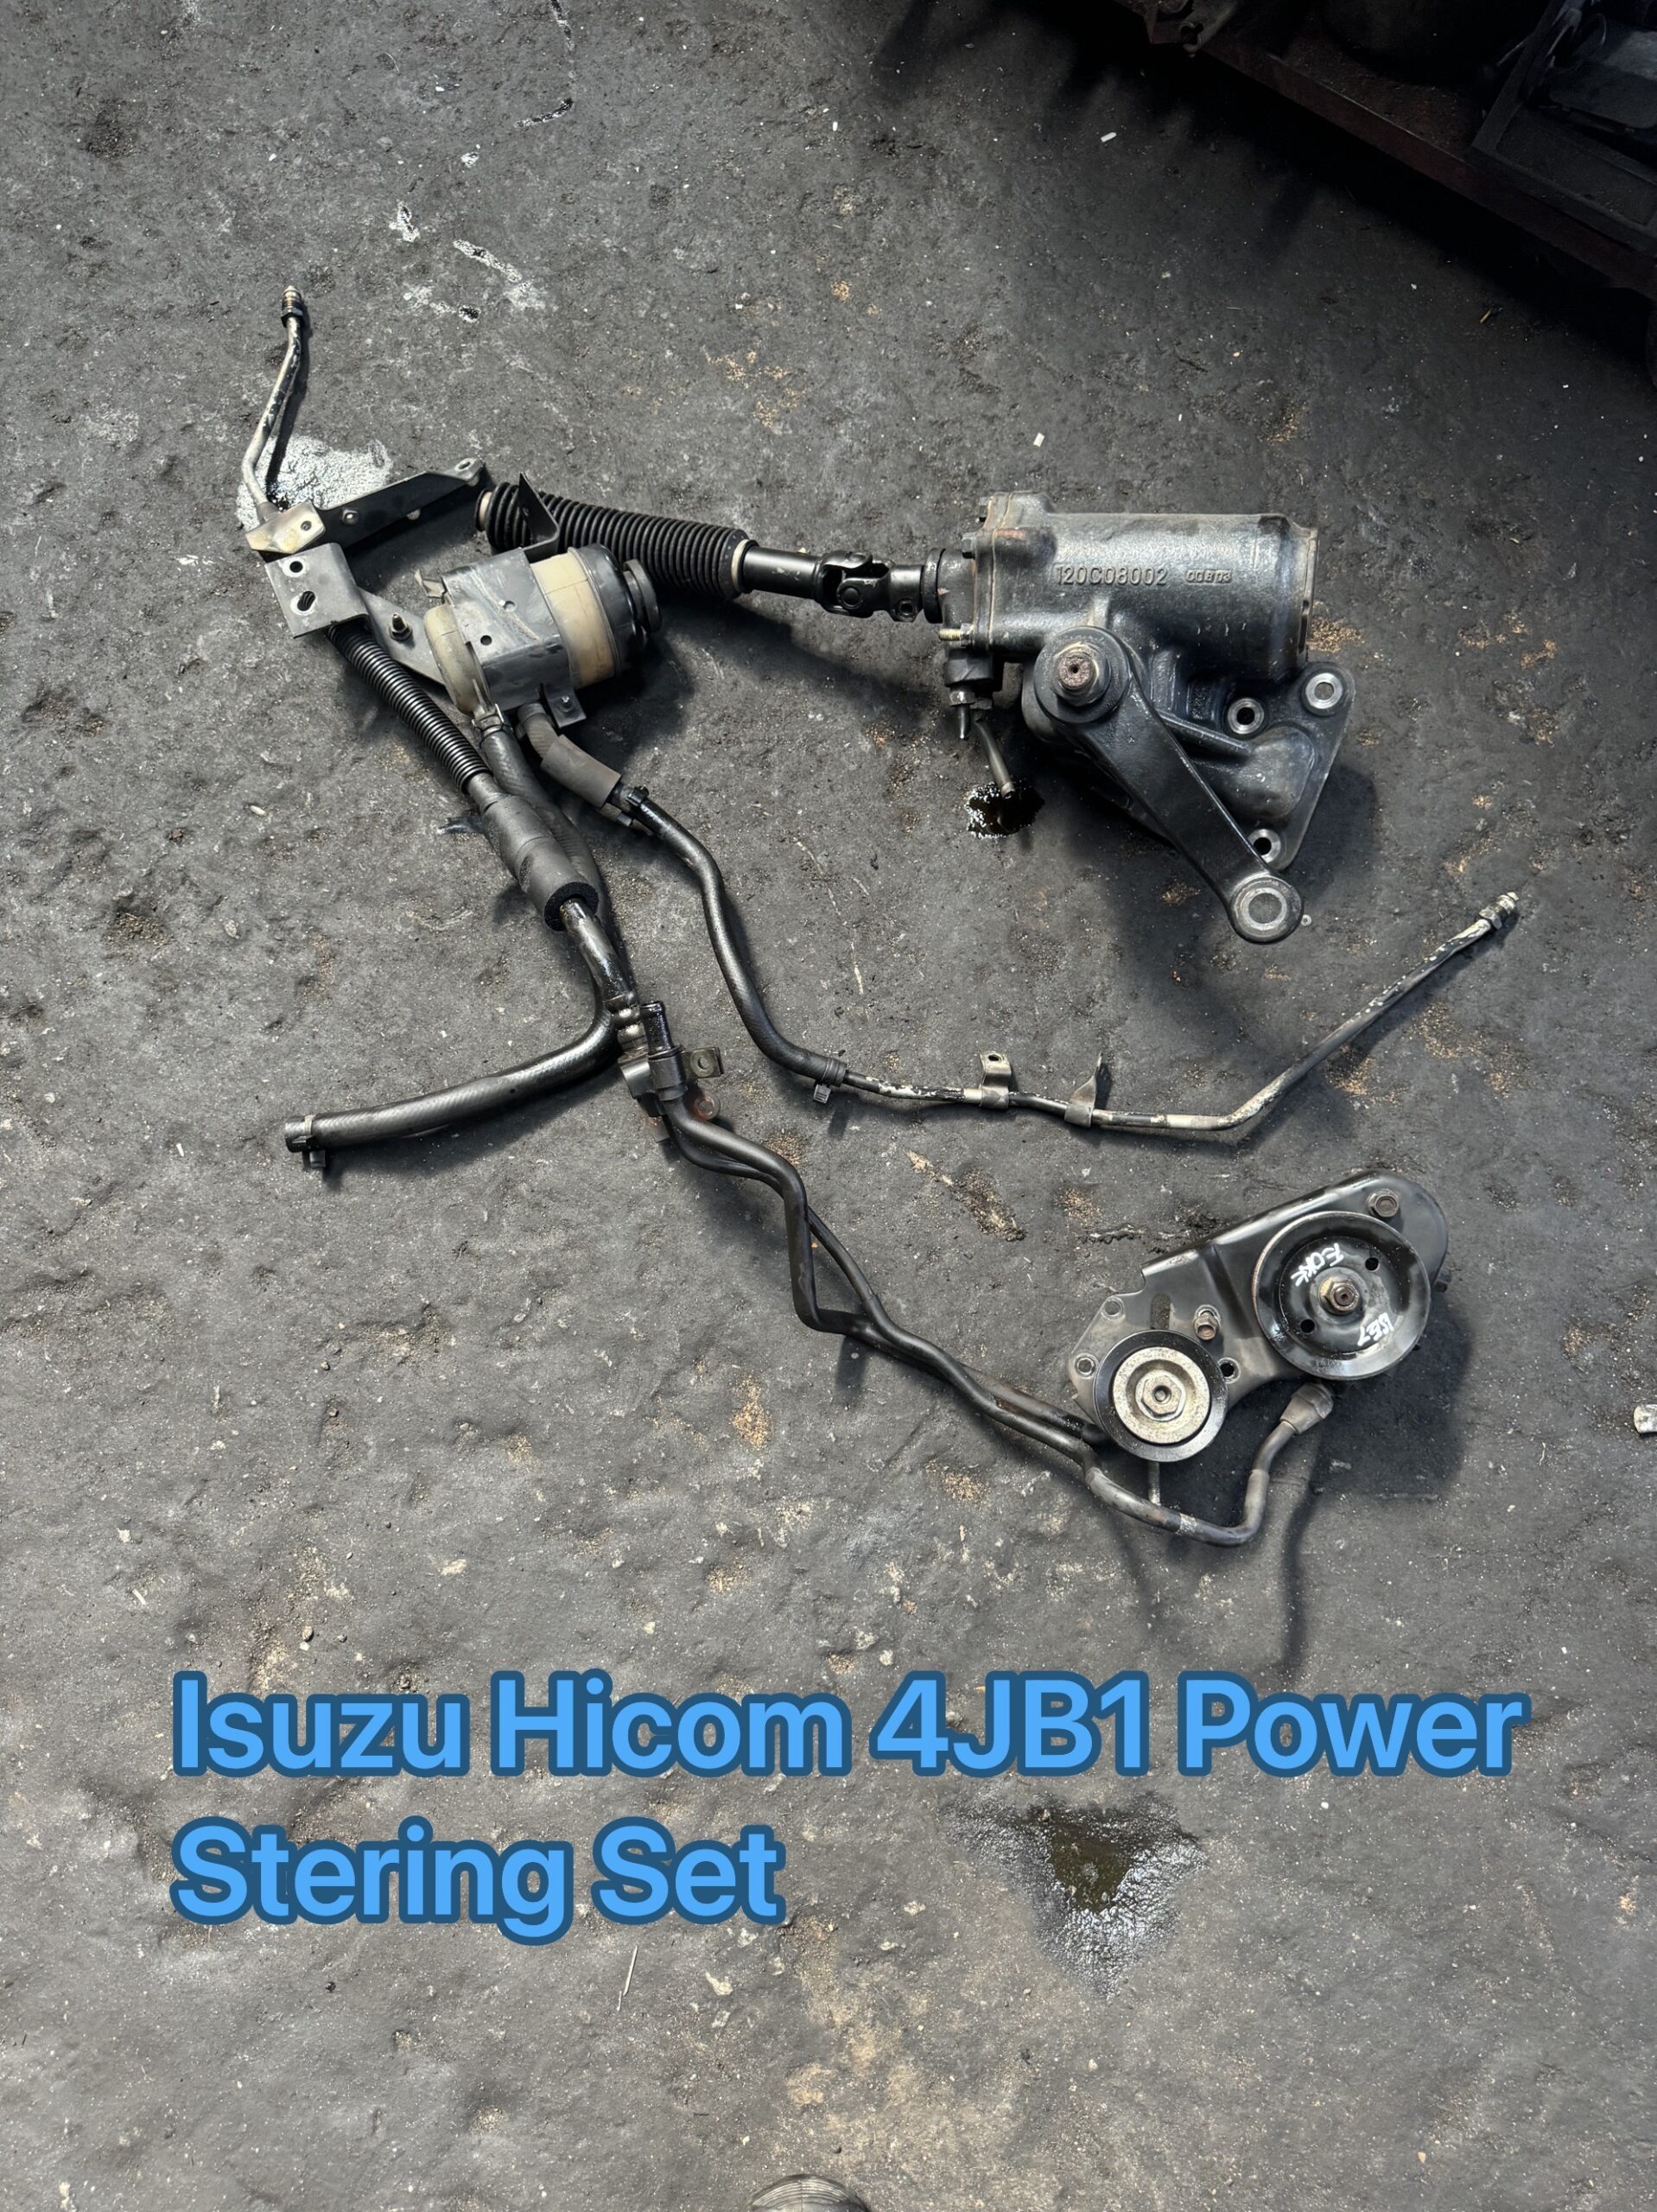 Isuzu Hicom NHR69 4JB1 Power Stering Set